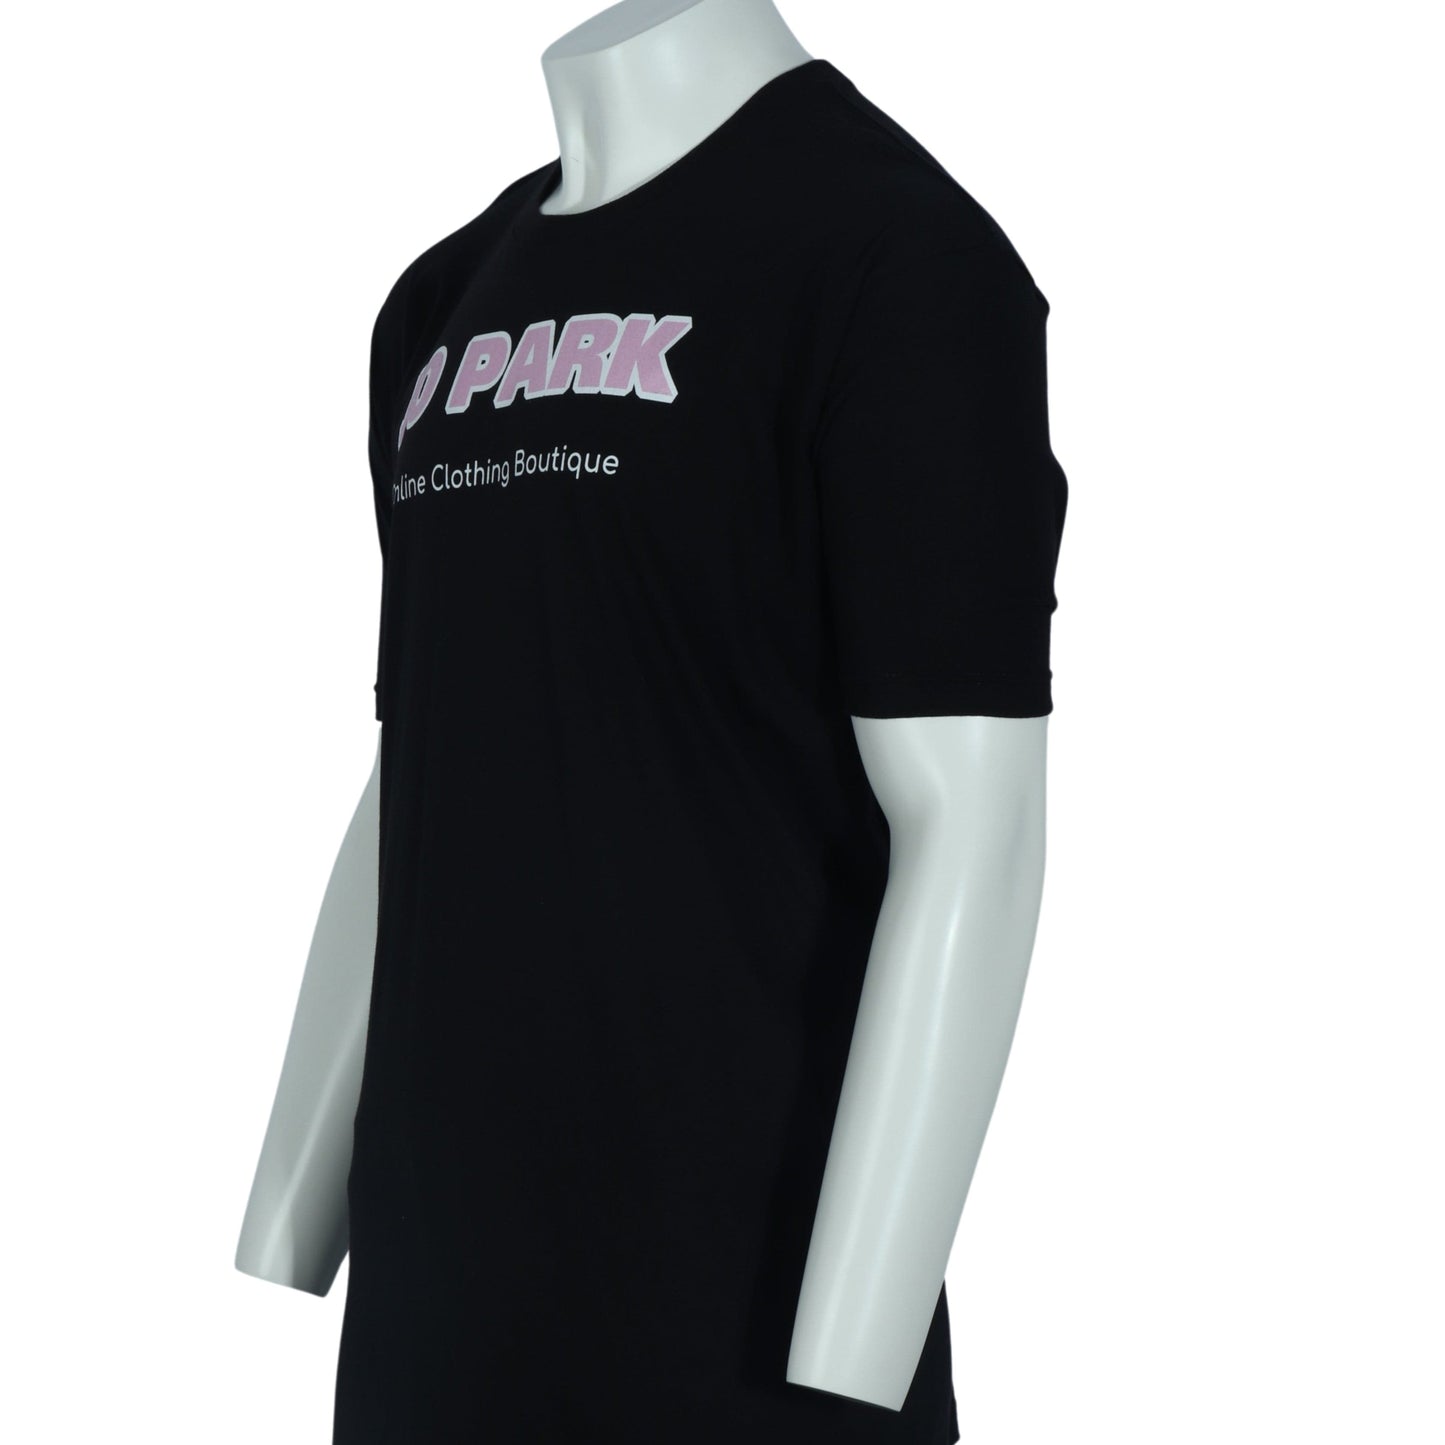 NEXT LEVEL Mens Tops XXL / Black NEXT LEVEL - JO PARK Printed T-Shirt